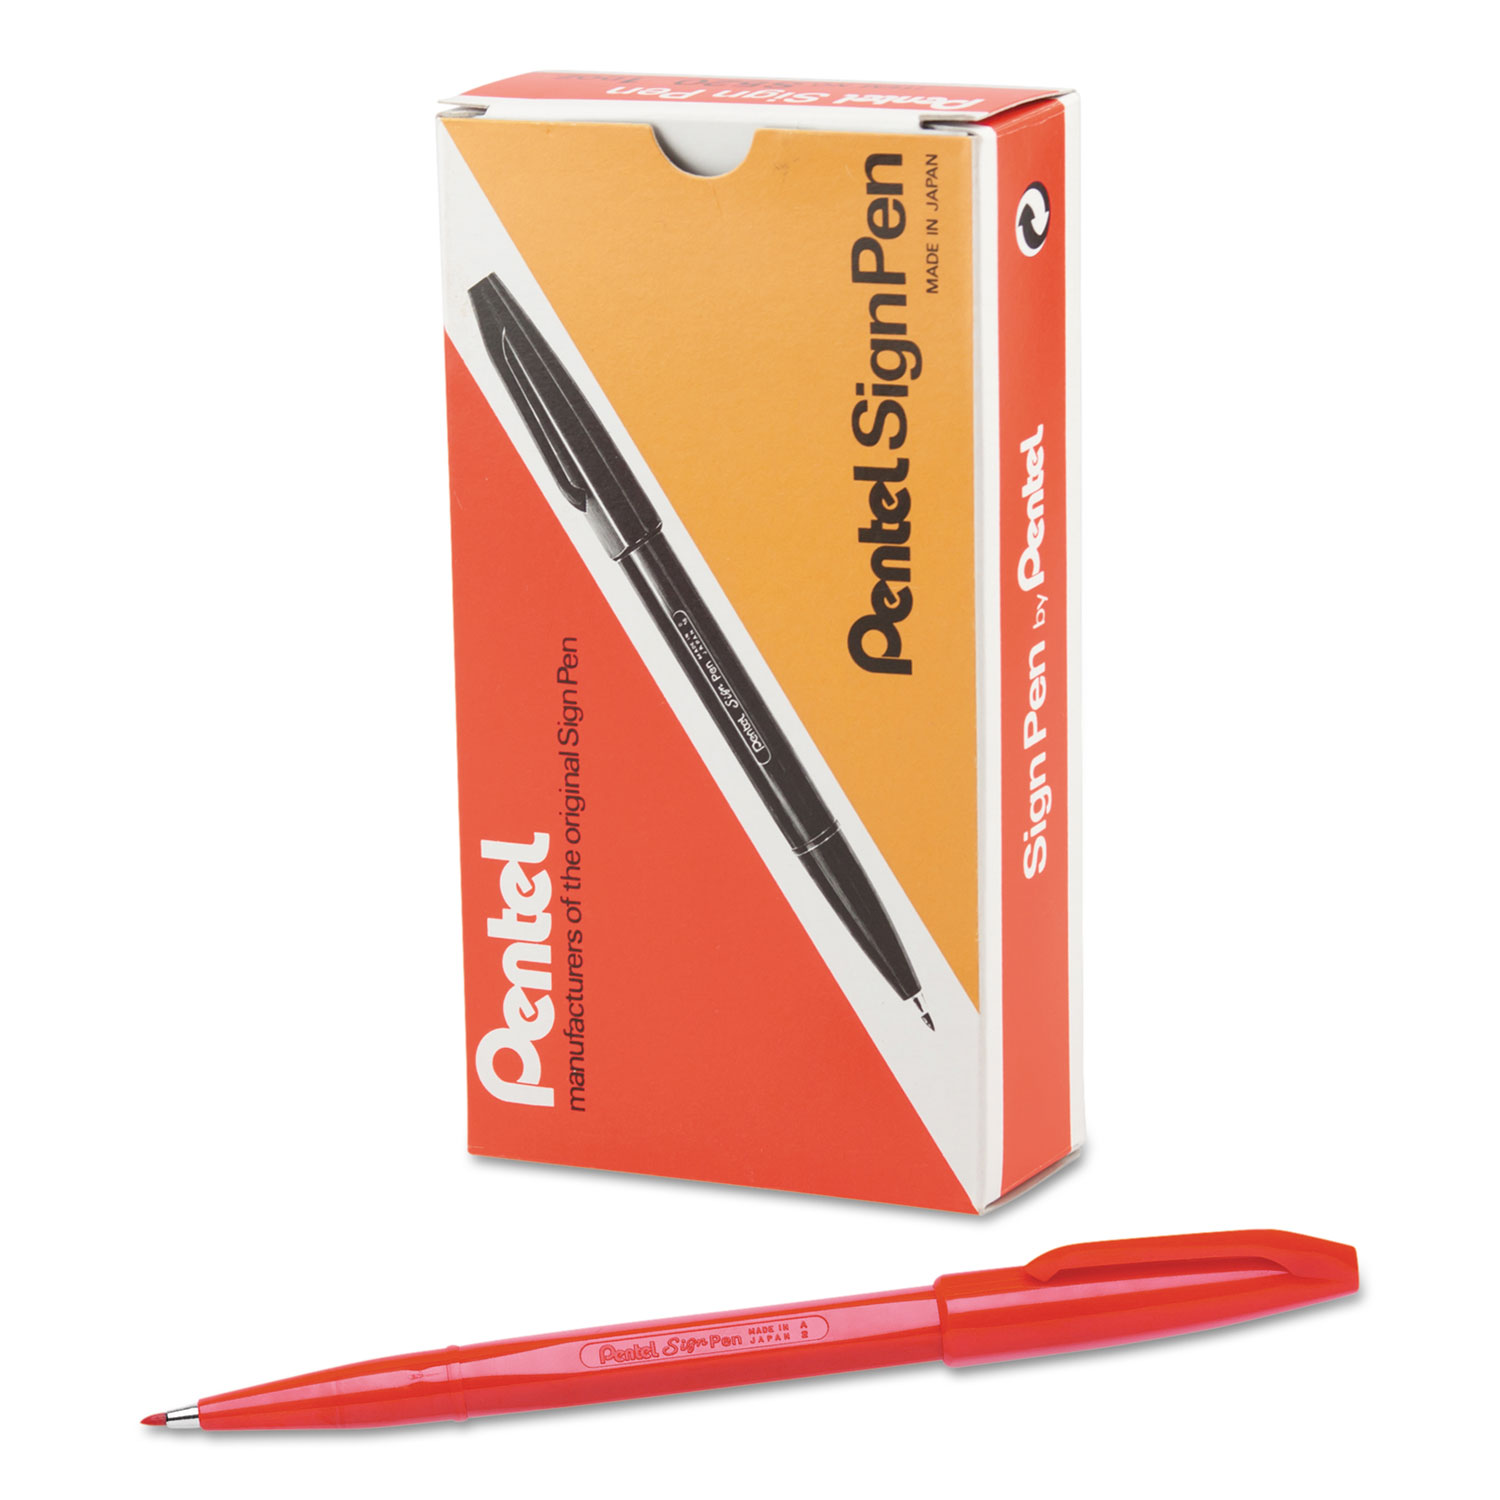 Razor Point Fine Line Porous Point Pen, Stick, Extra-Fine 0.3 mm, Black  Ink, Black Barrel, Dozen